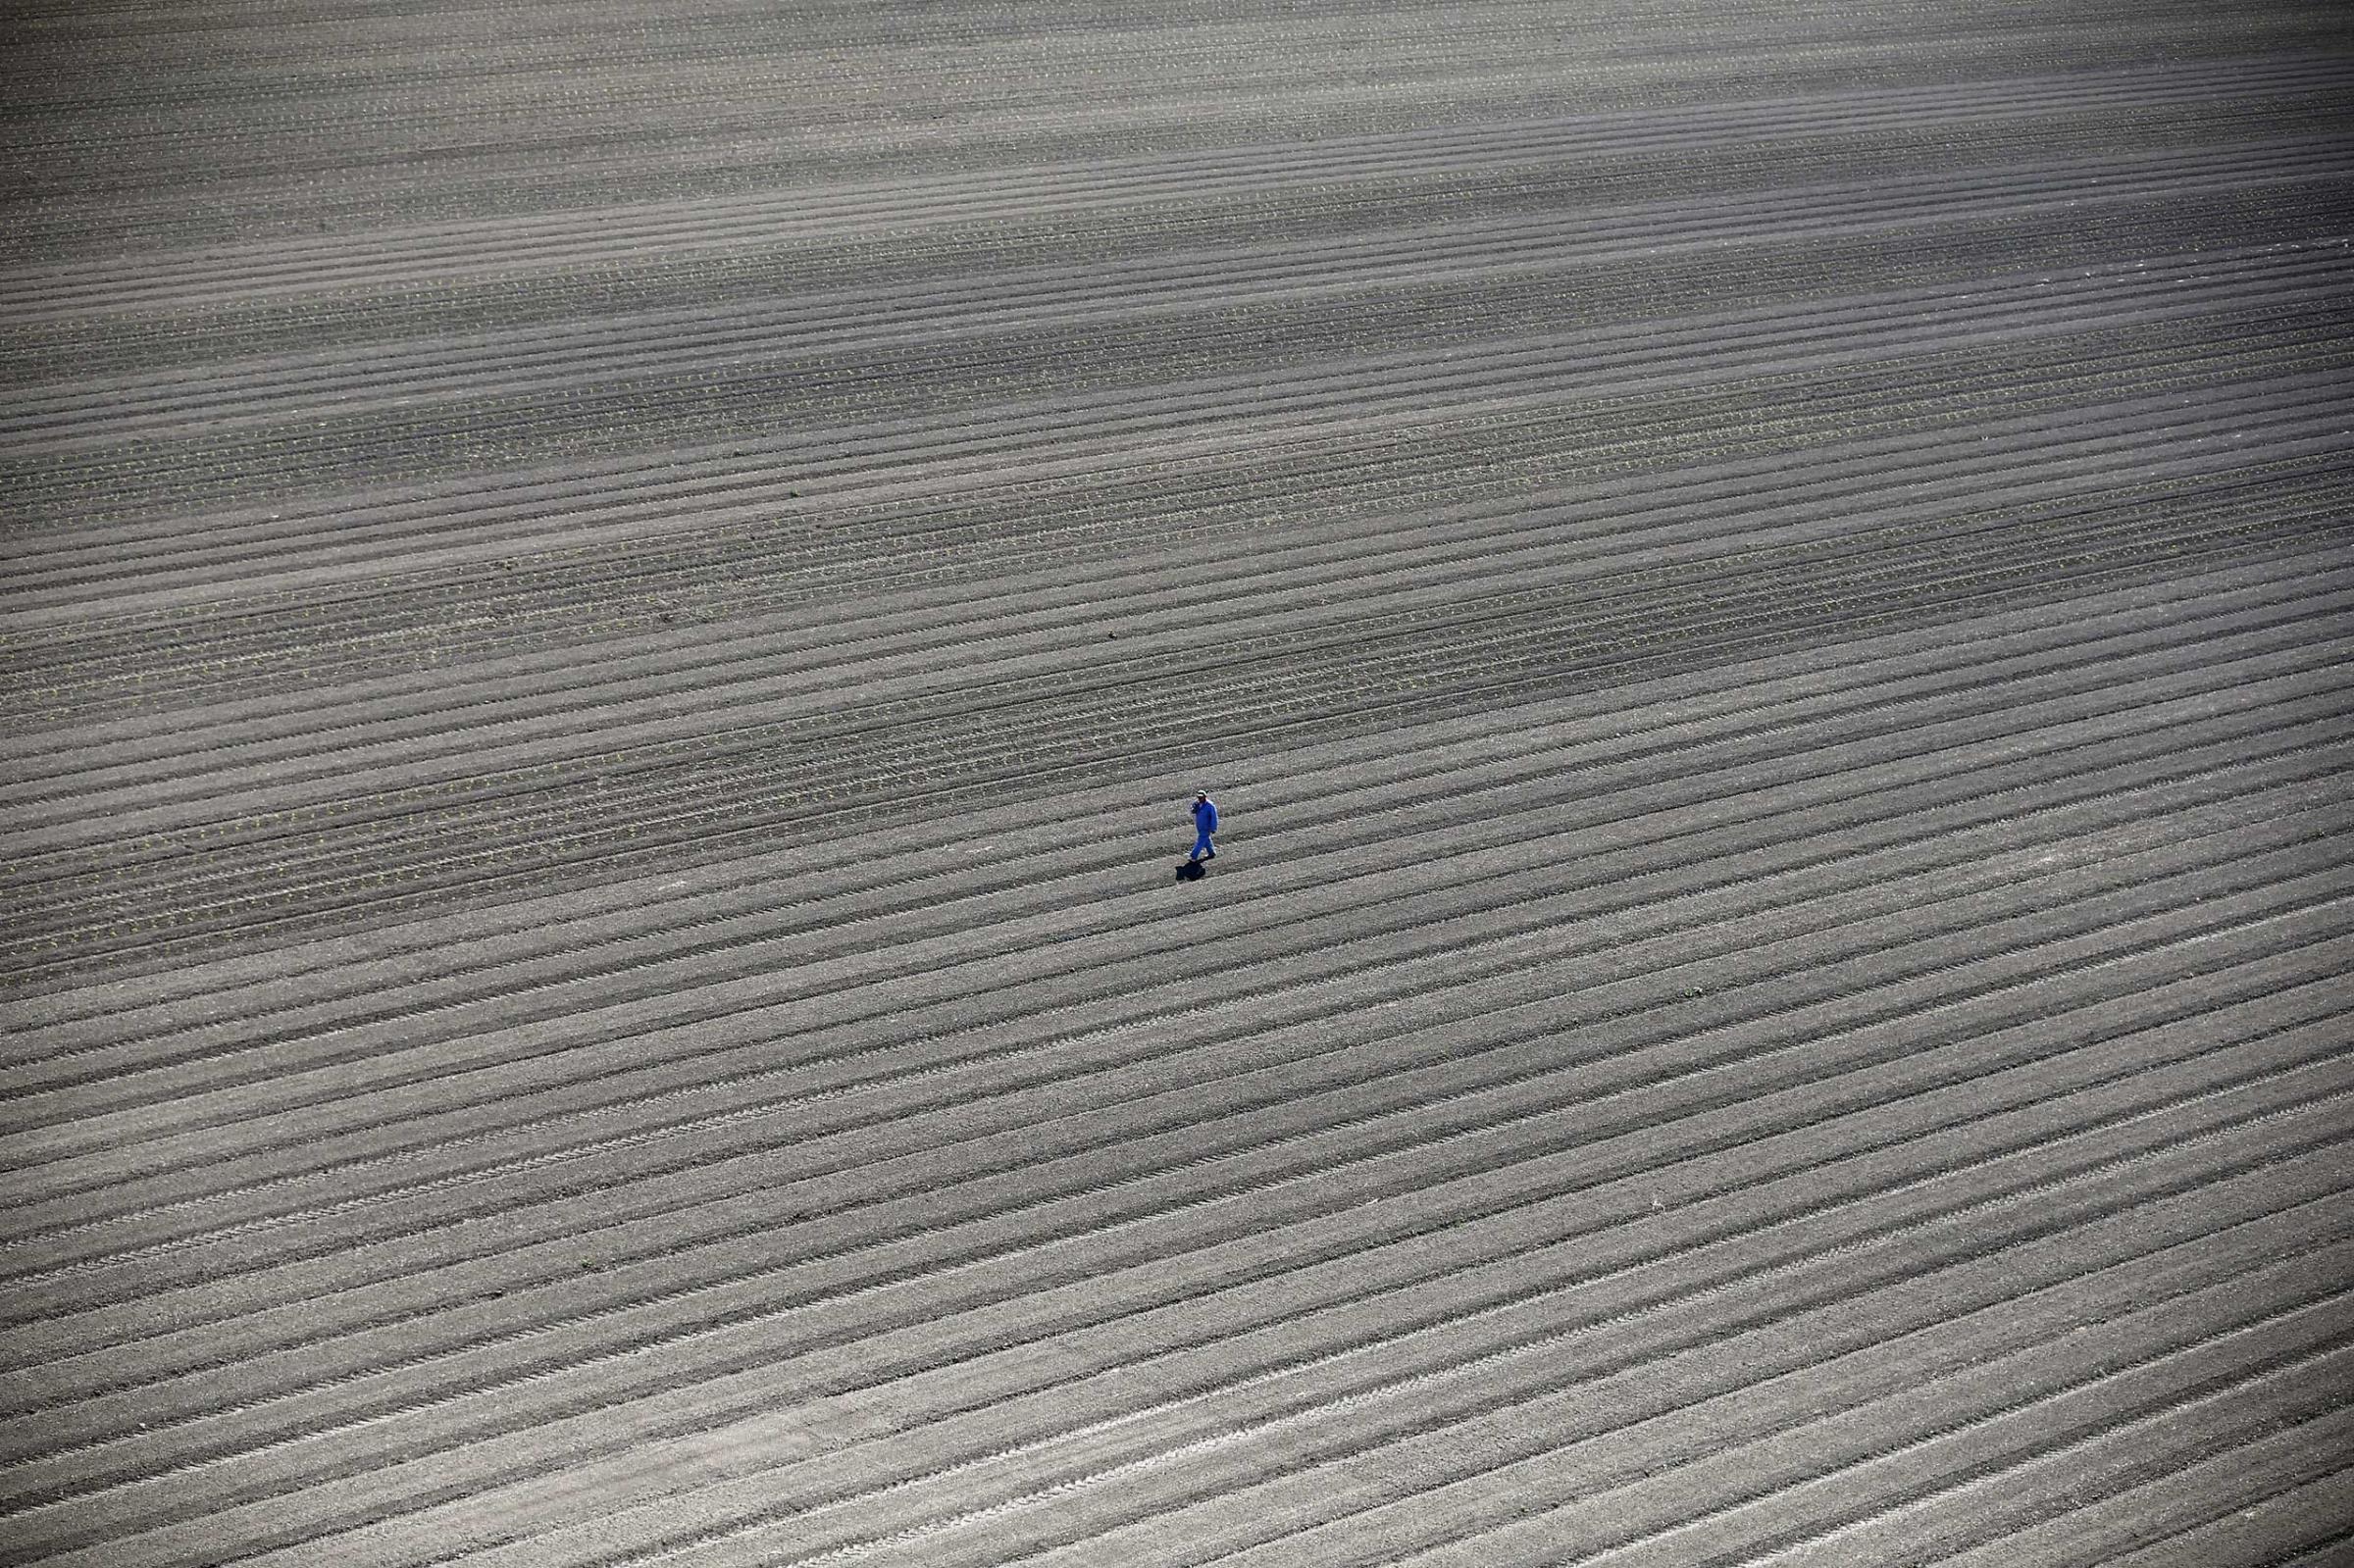 A worker walks through farm fields in Los Banos, Calif., May 5, 2015.